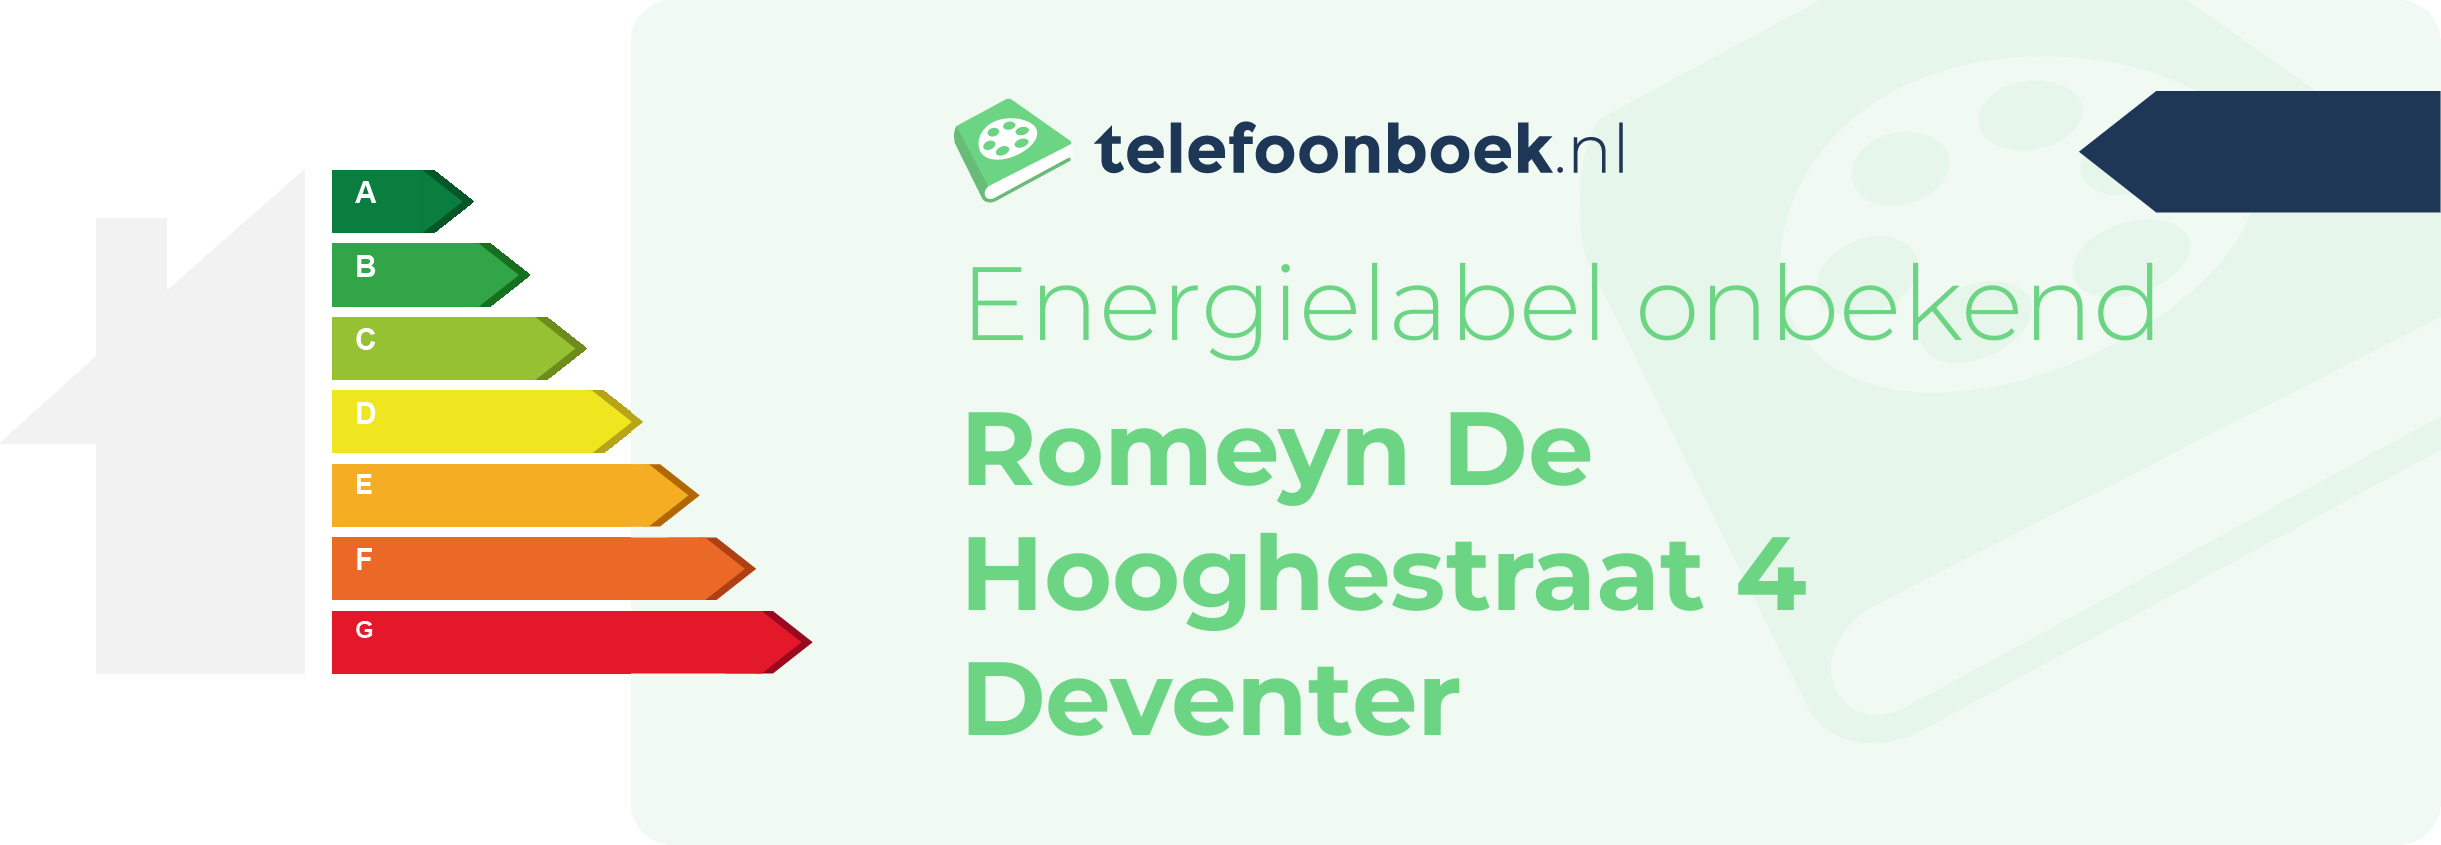 Energielabel Romeyn De Hooghestraat 4 Deventer